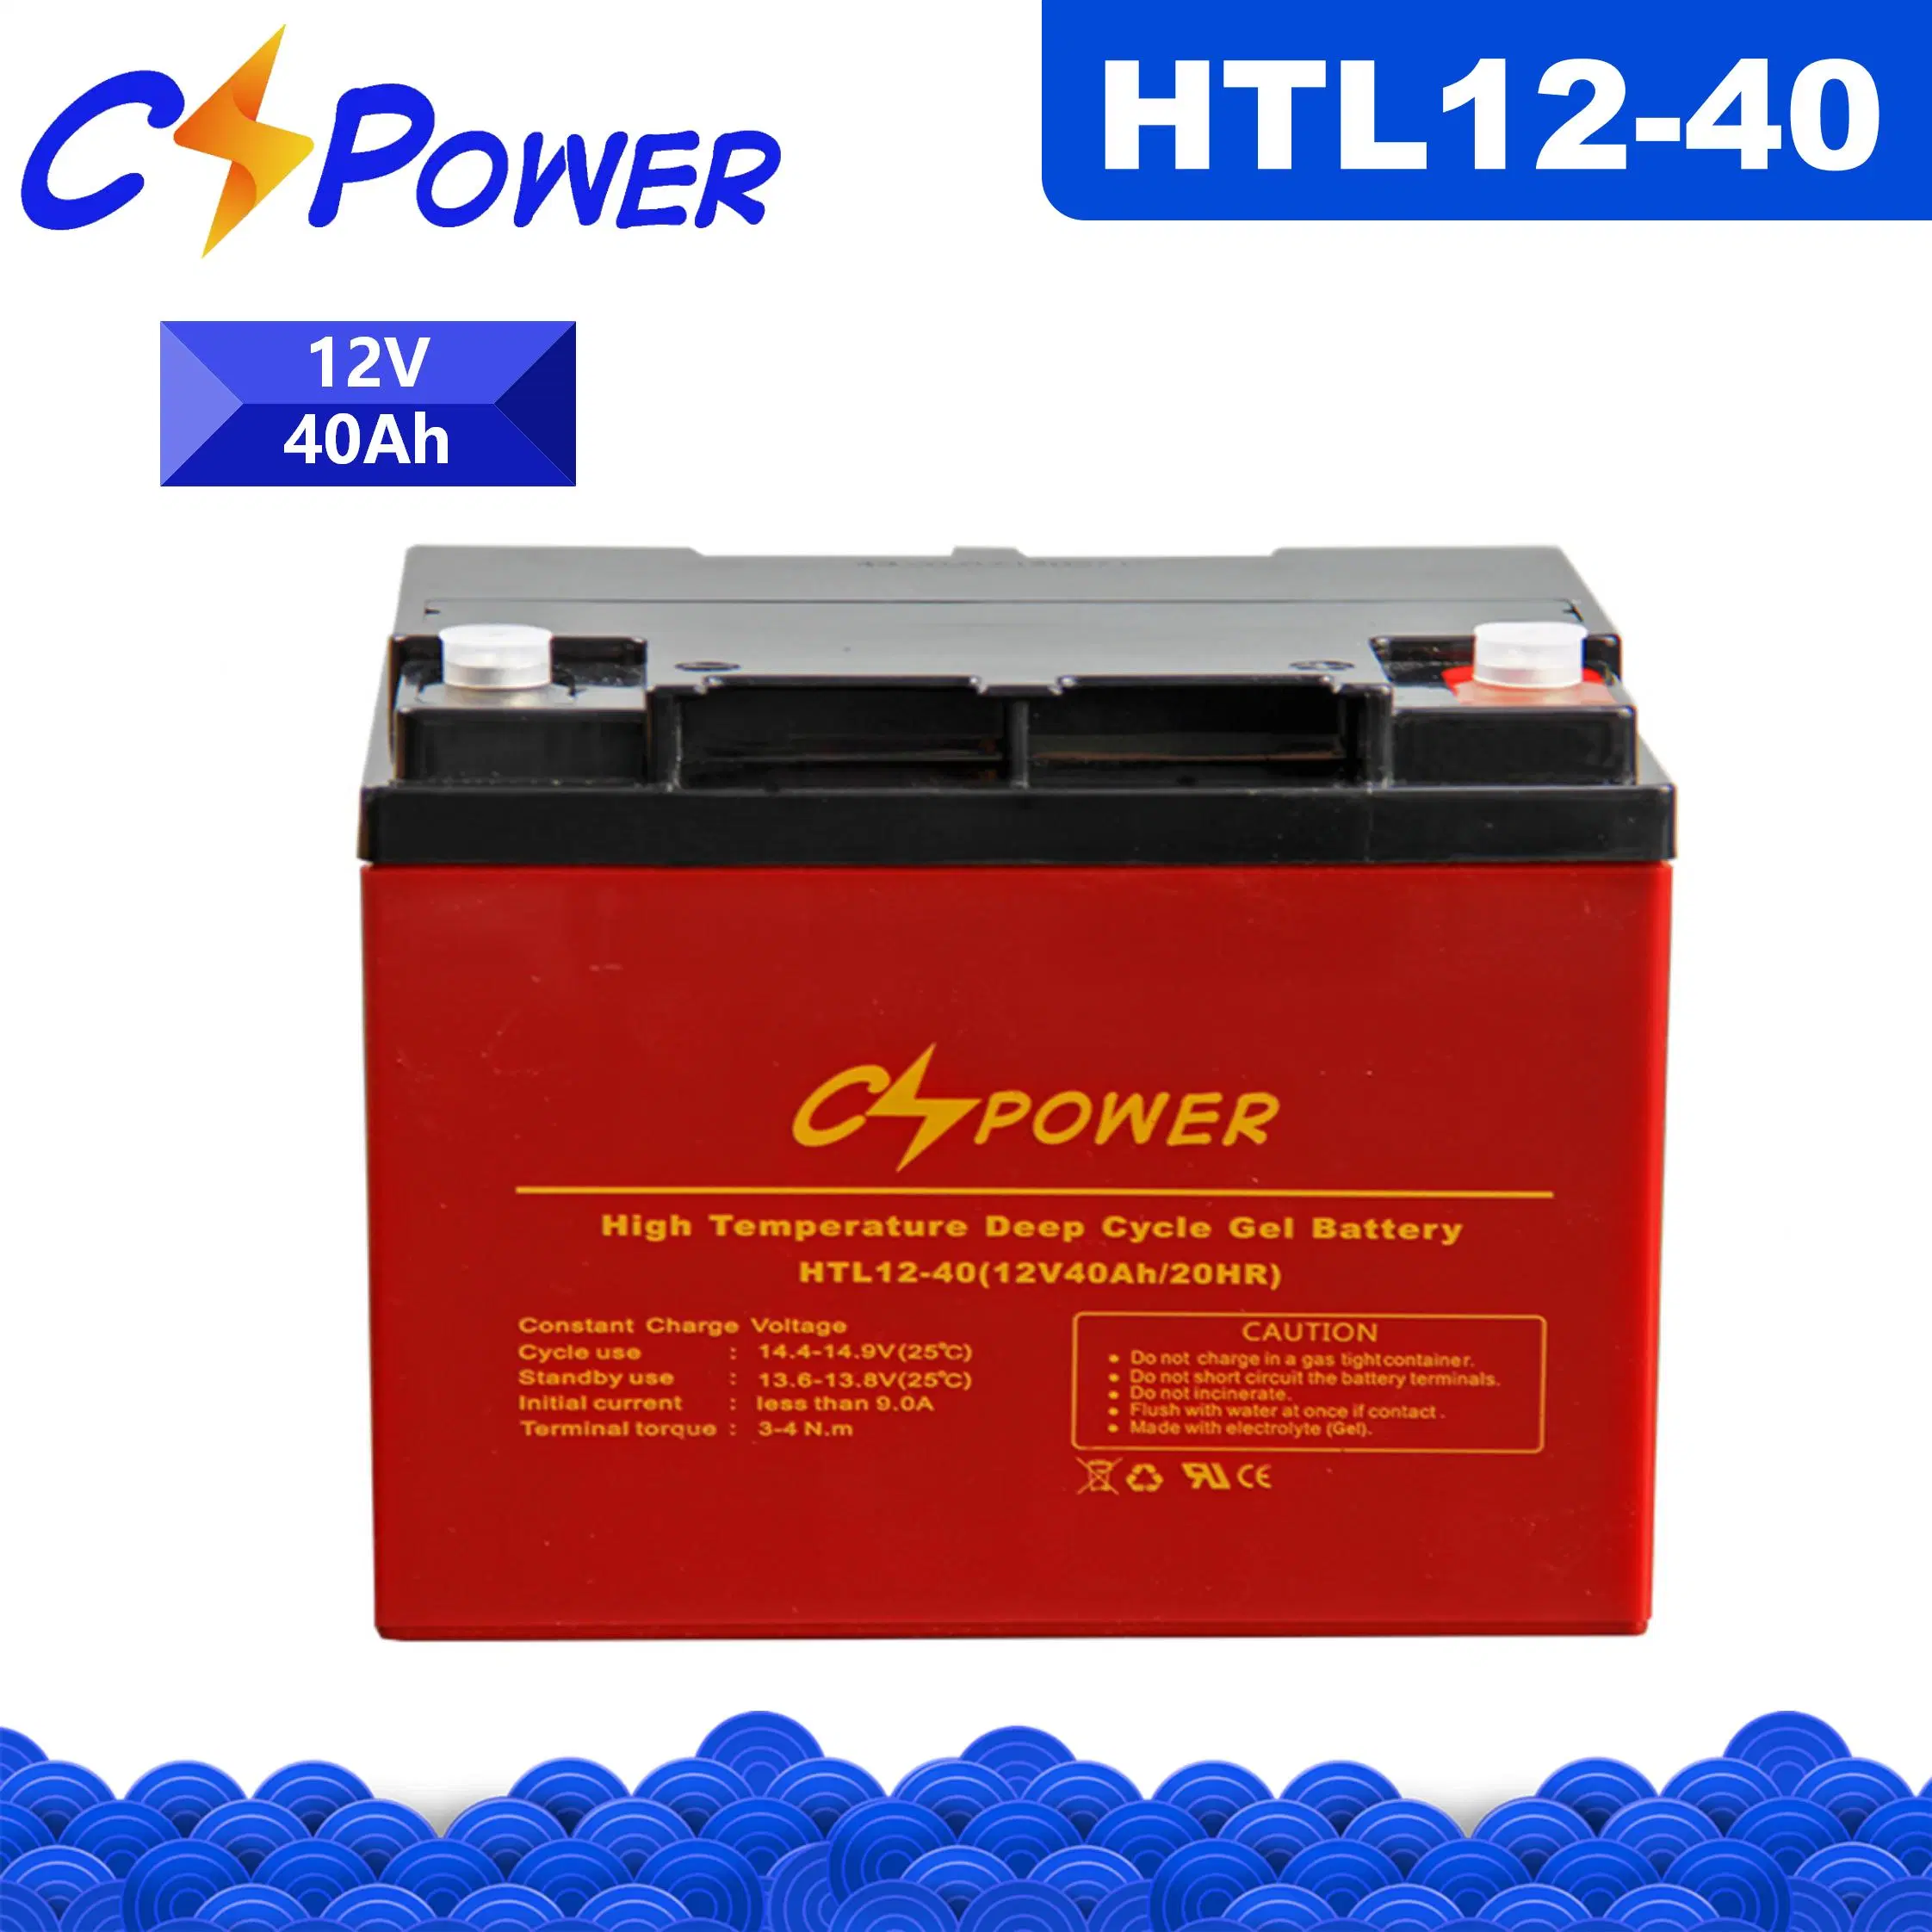 Cspower Battery China Factory 12V40ah Maintenance Free Gel Battery - Battery Pack, Foorklift